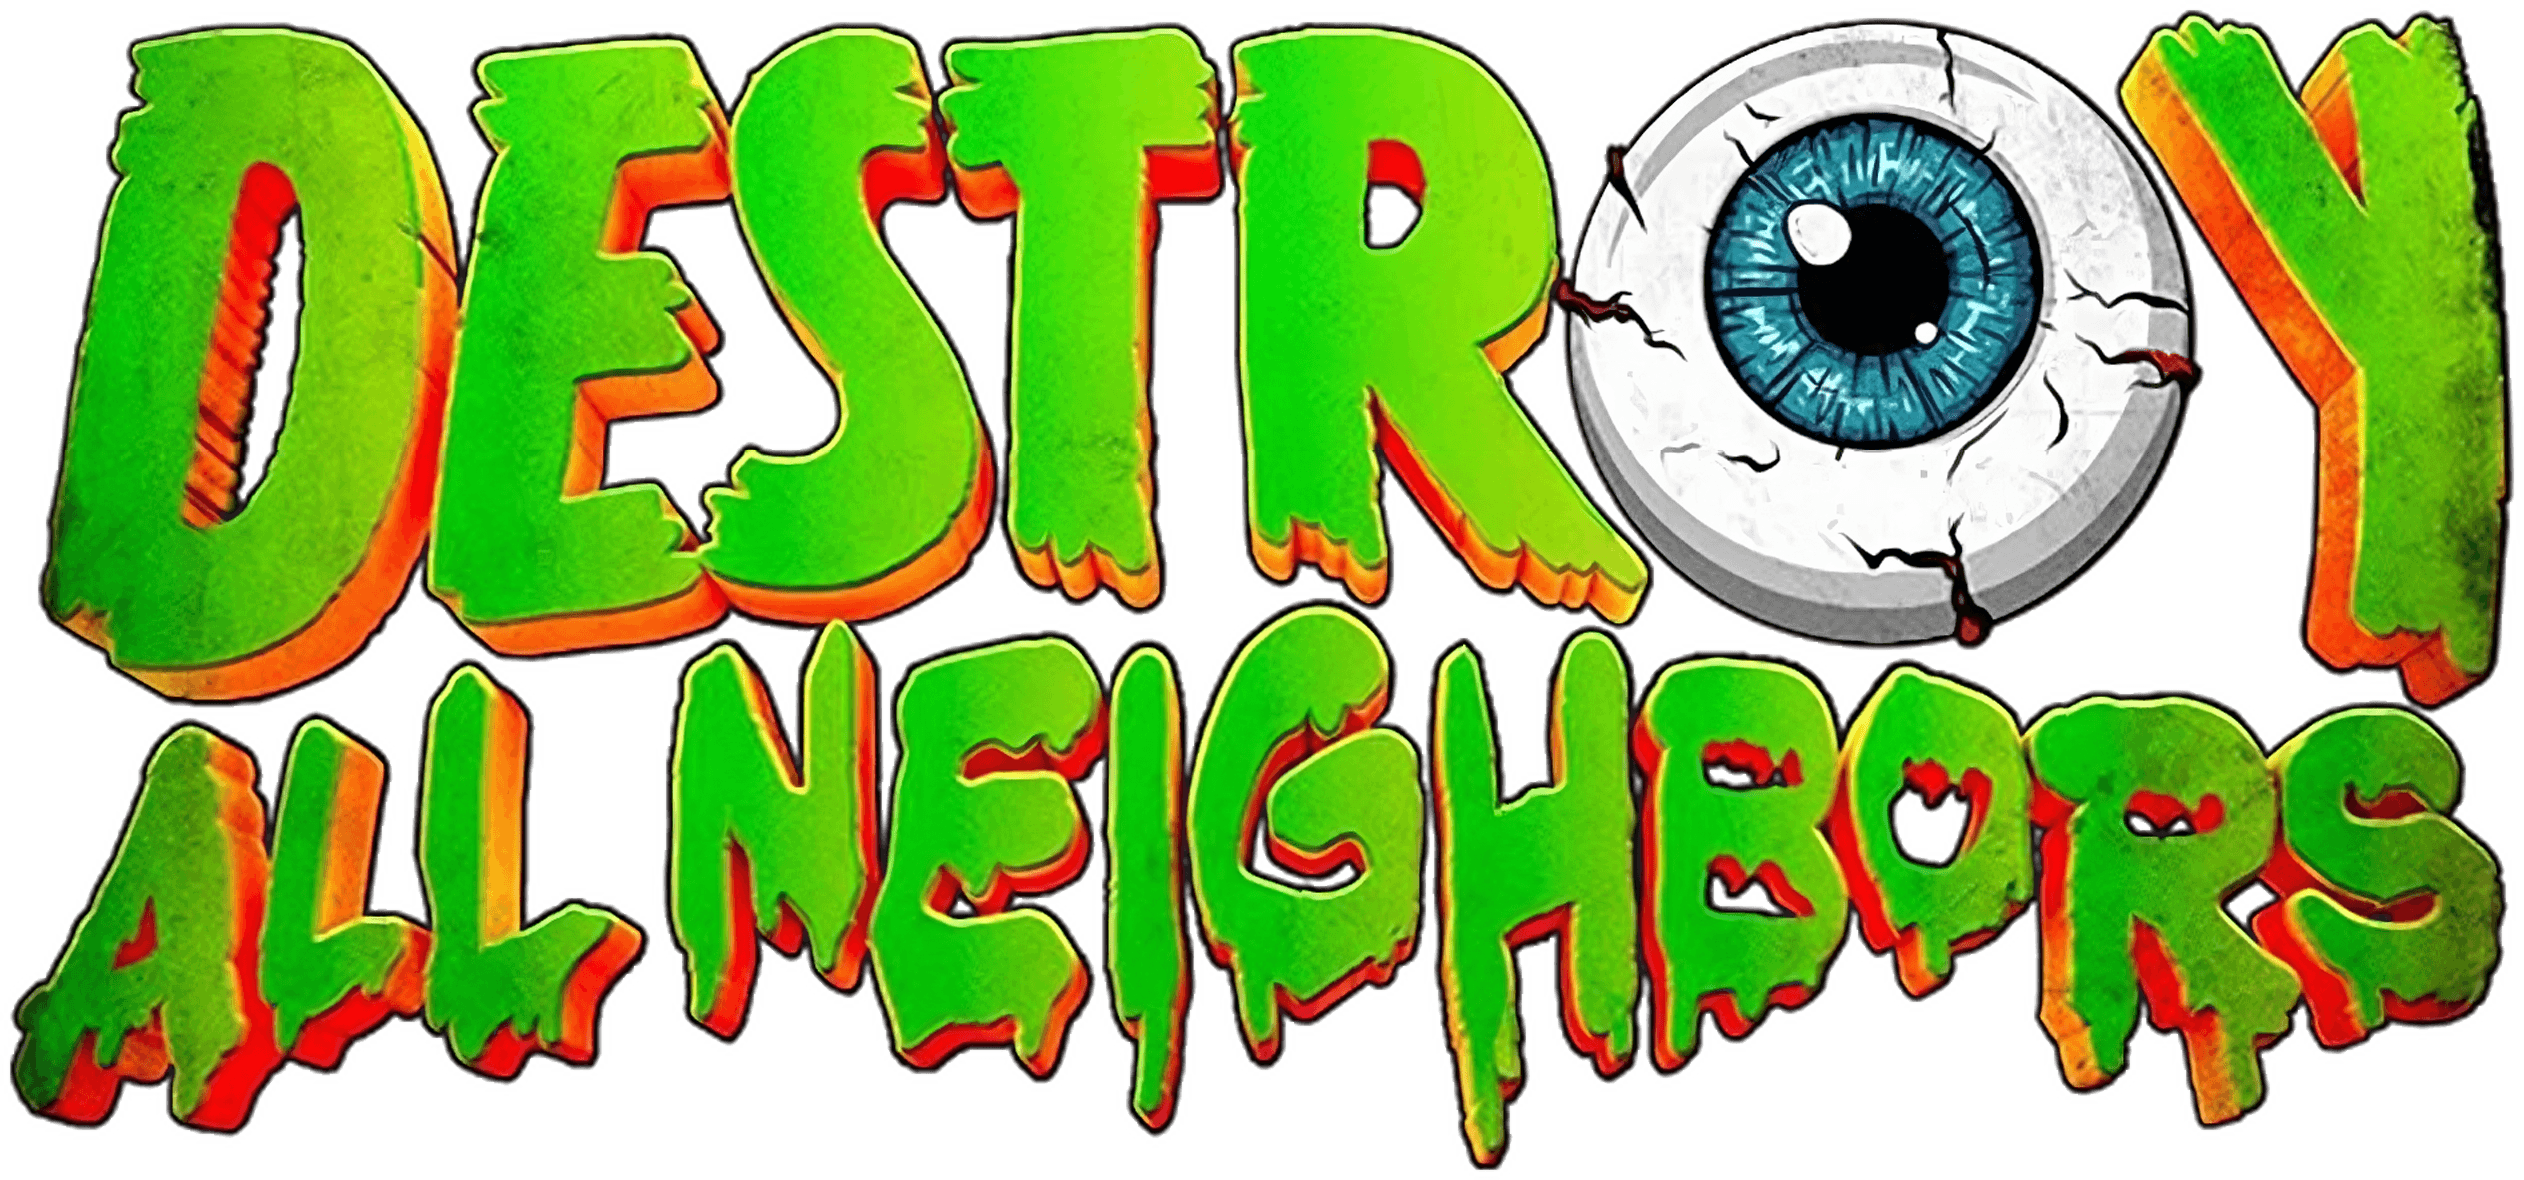 Destroy All Neighbors logo